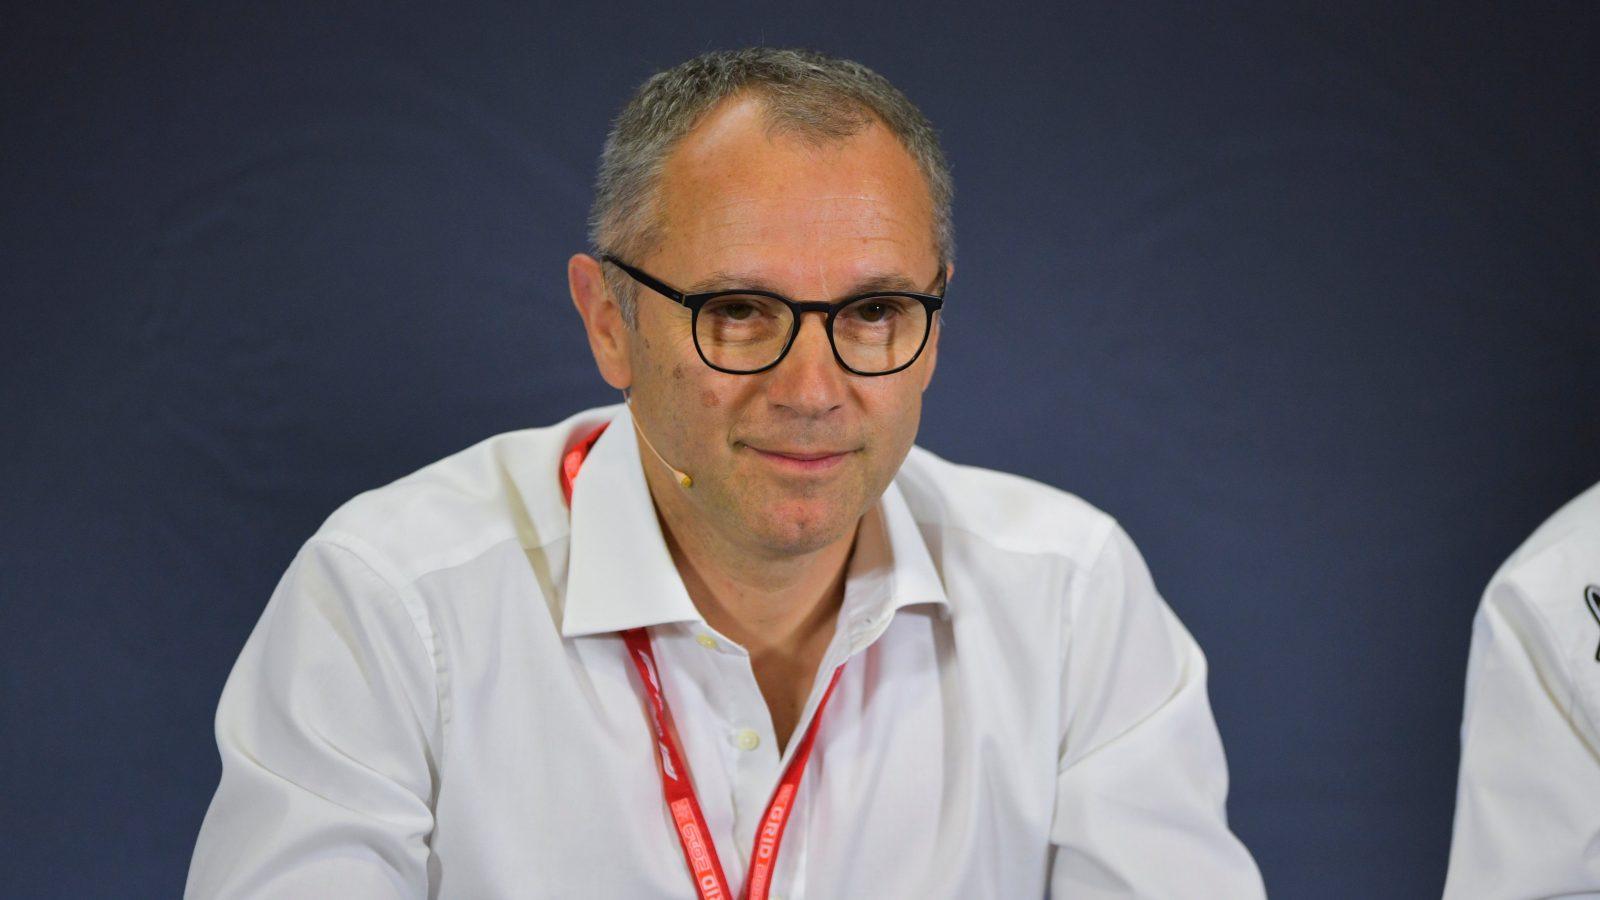 Stefano Domenicali